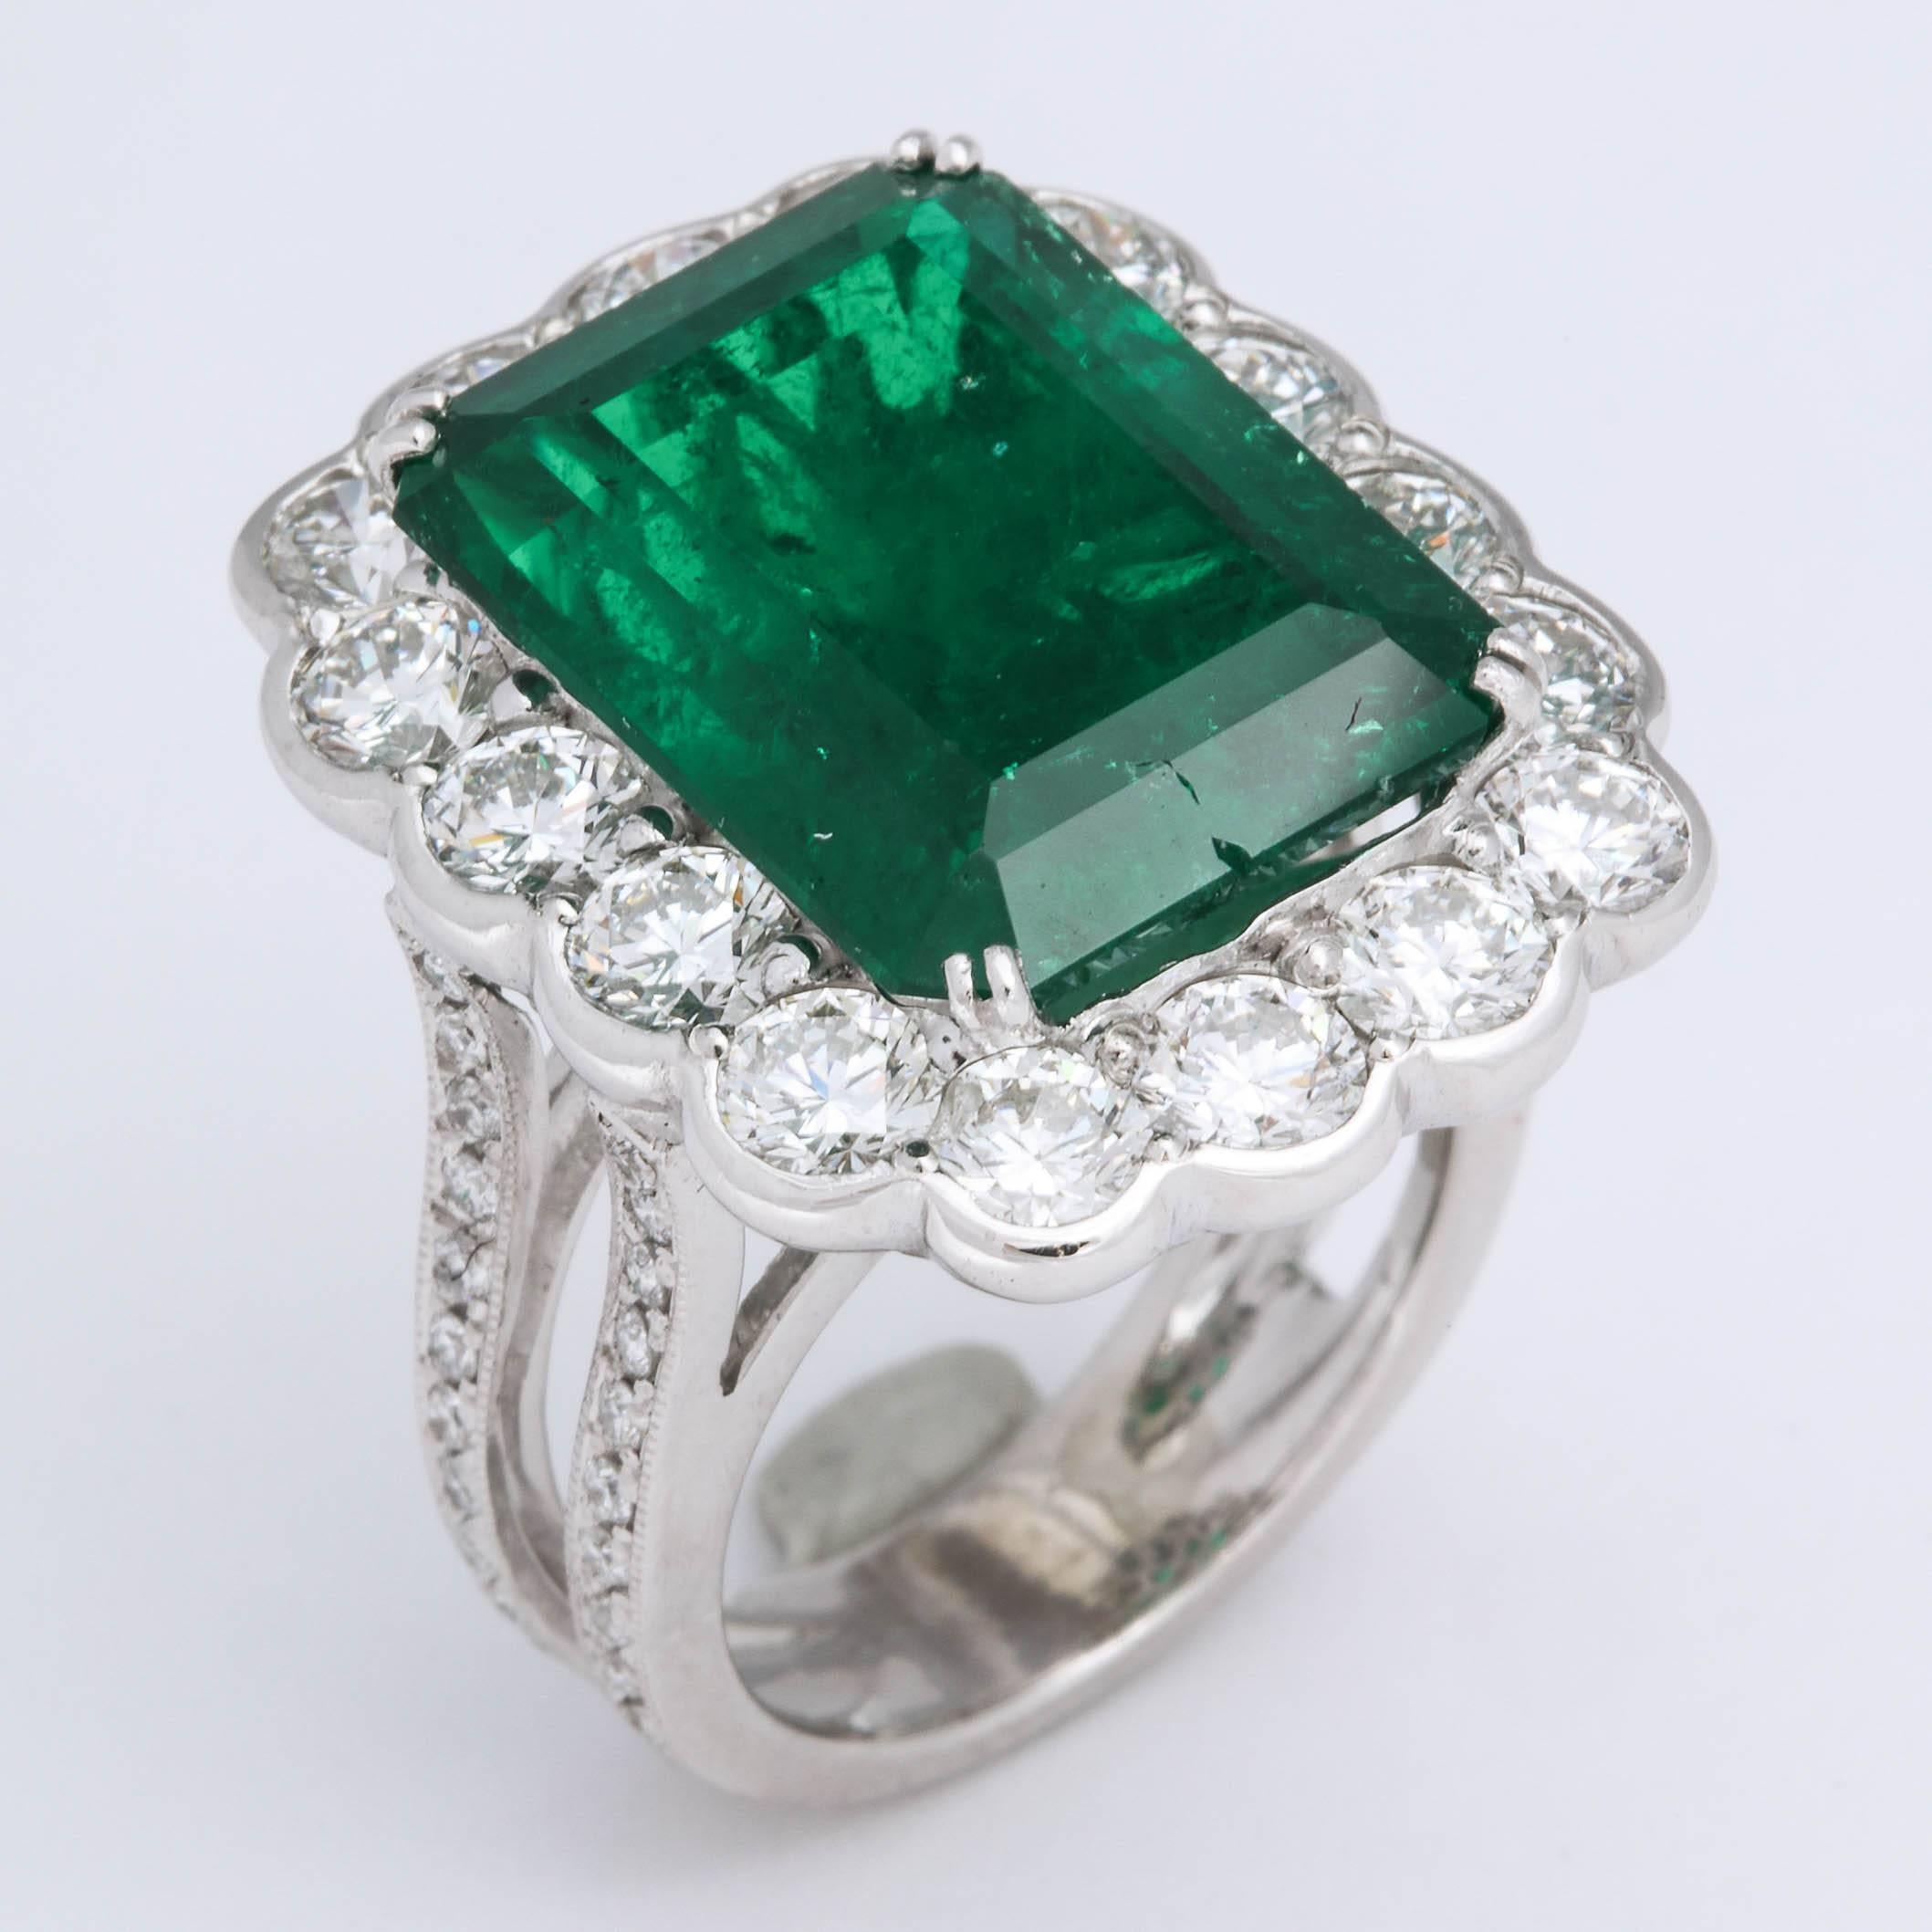 13 carat emerald cut diamond ring